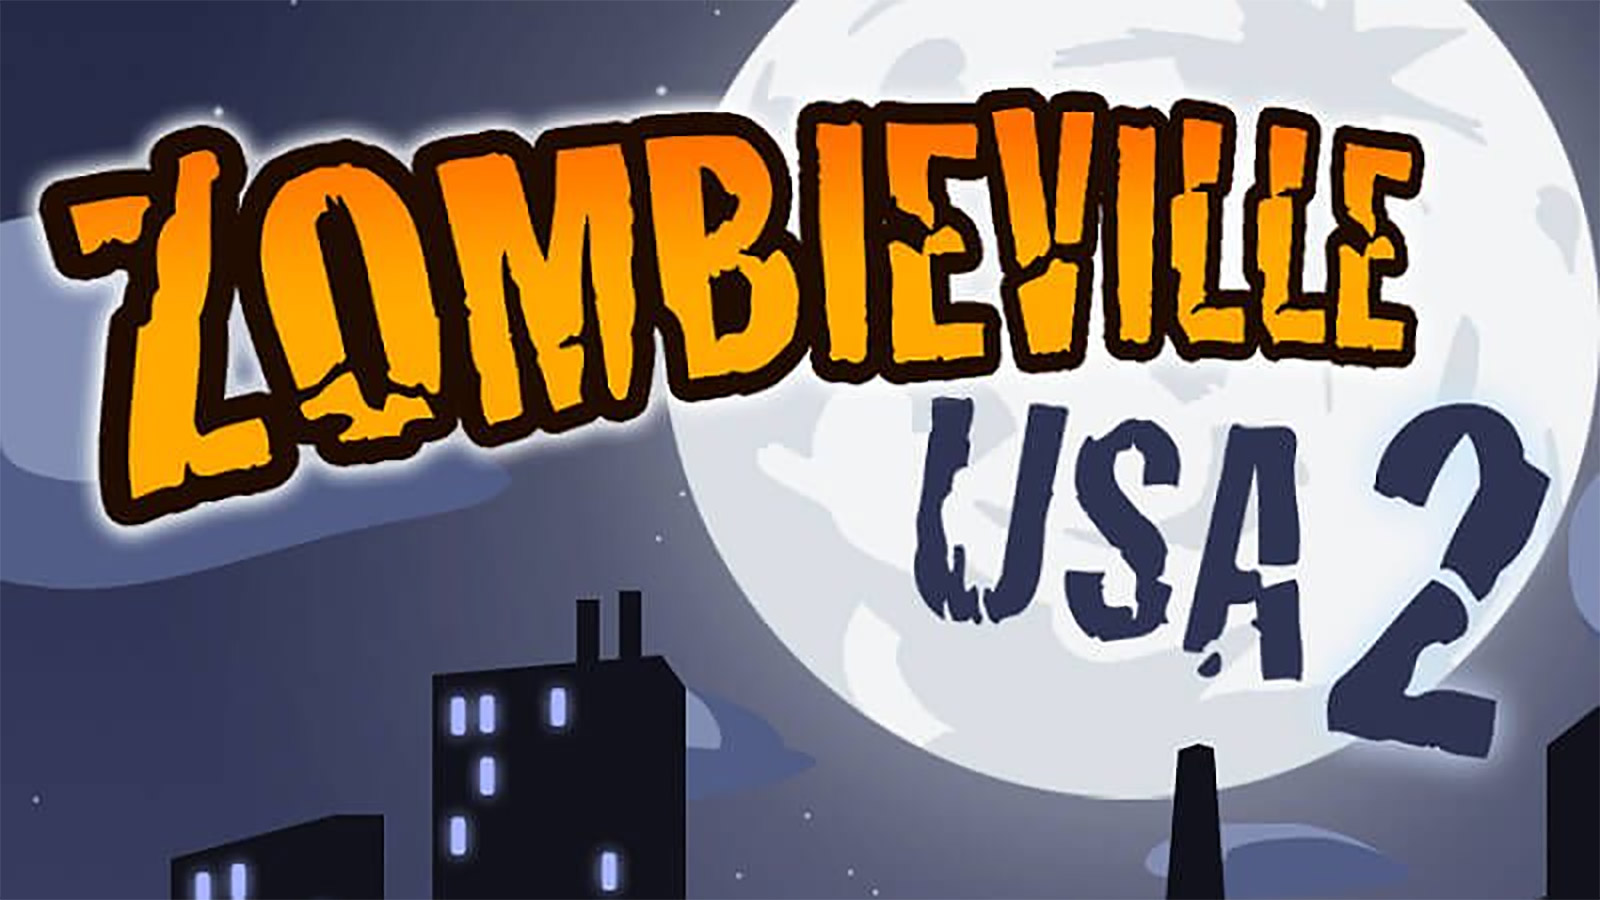 Zombieville USA 2 Mod Apk 1.6.1 (Unlimited Money)